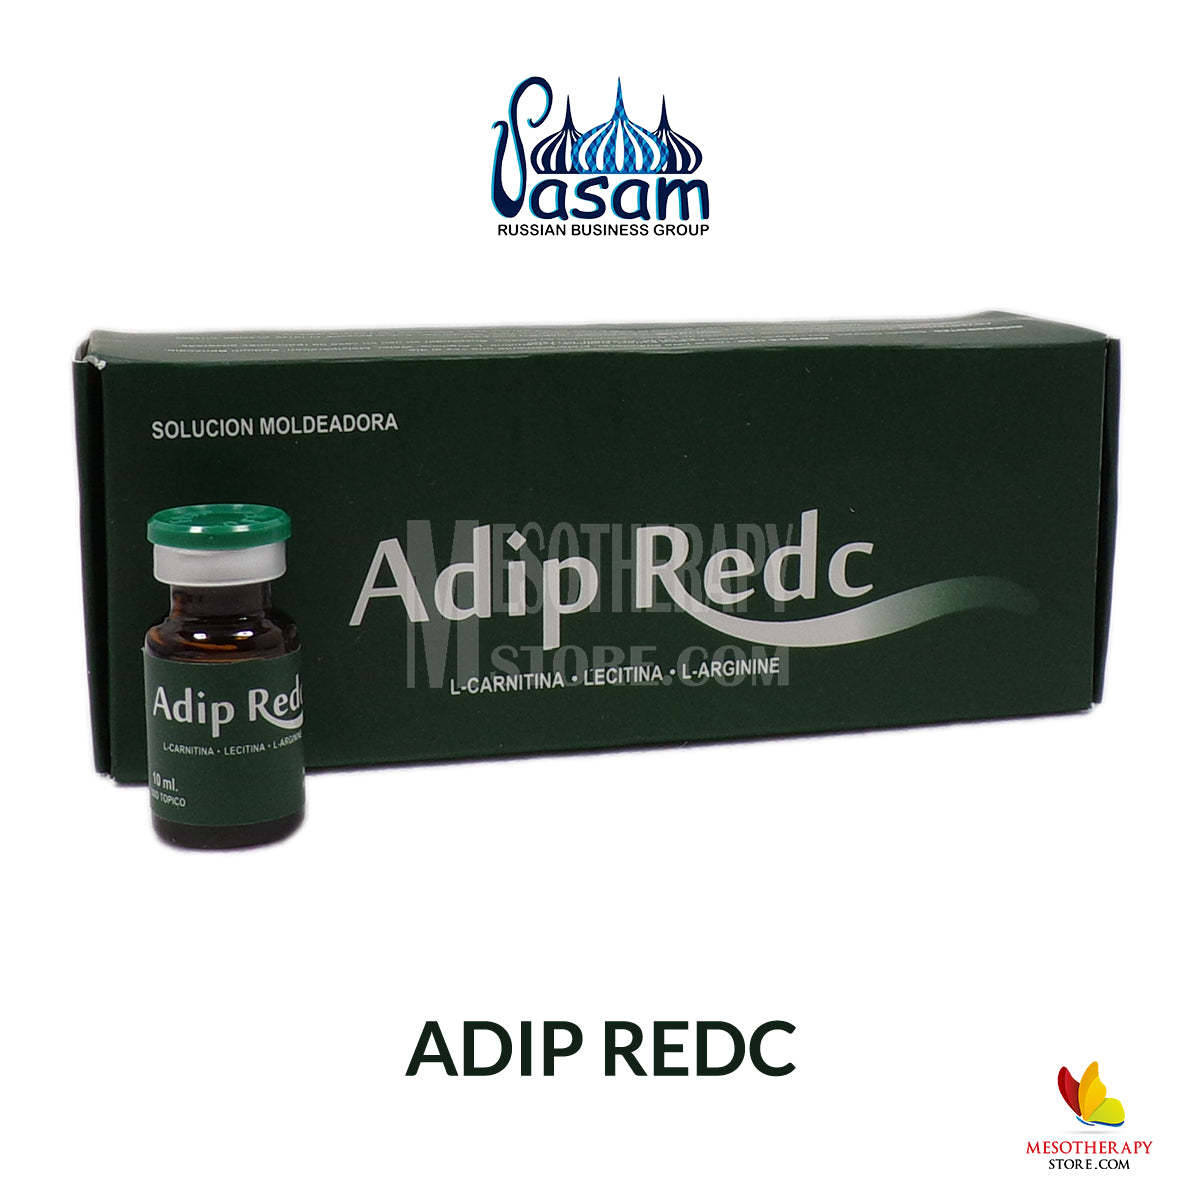 Adip Redc Molding Solution By Vasam - $90.00